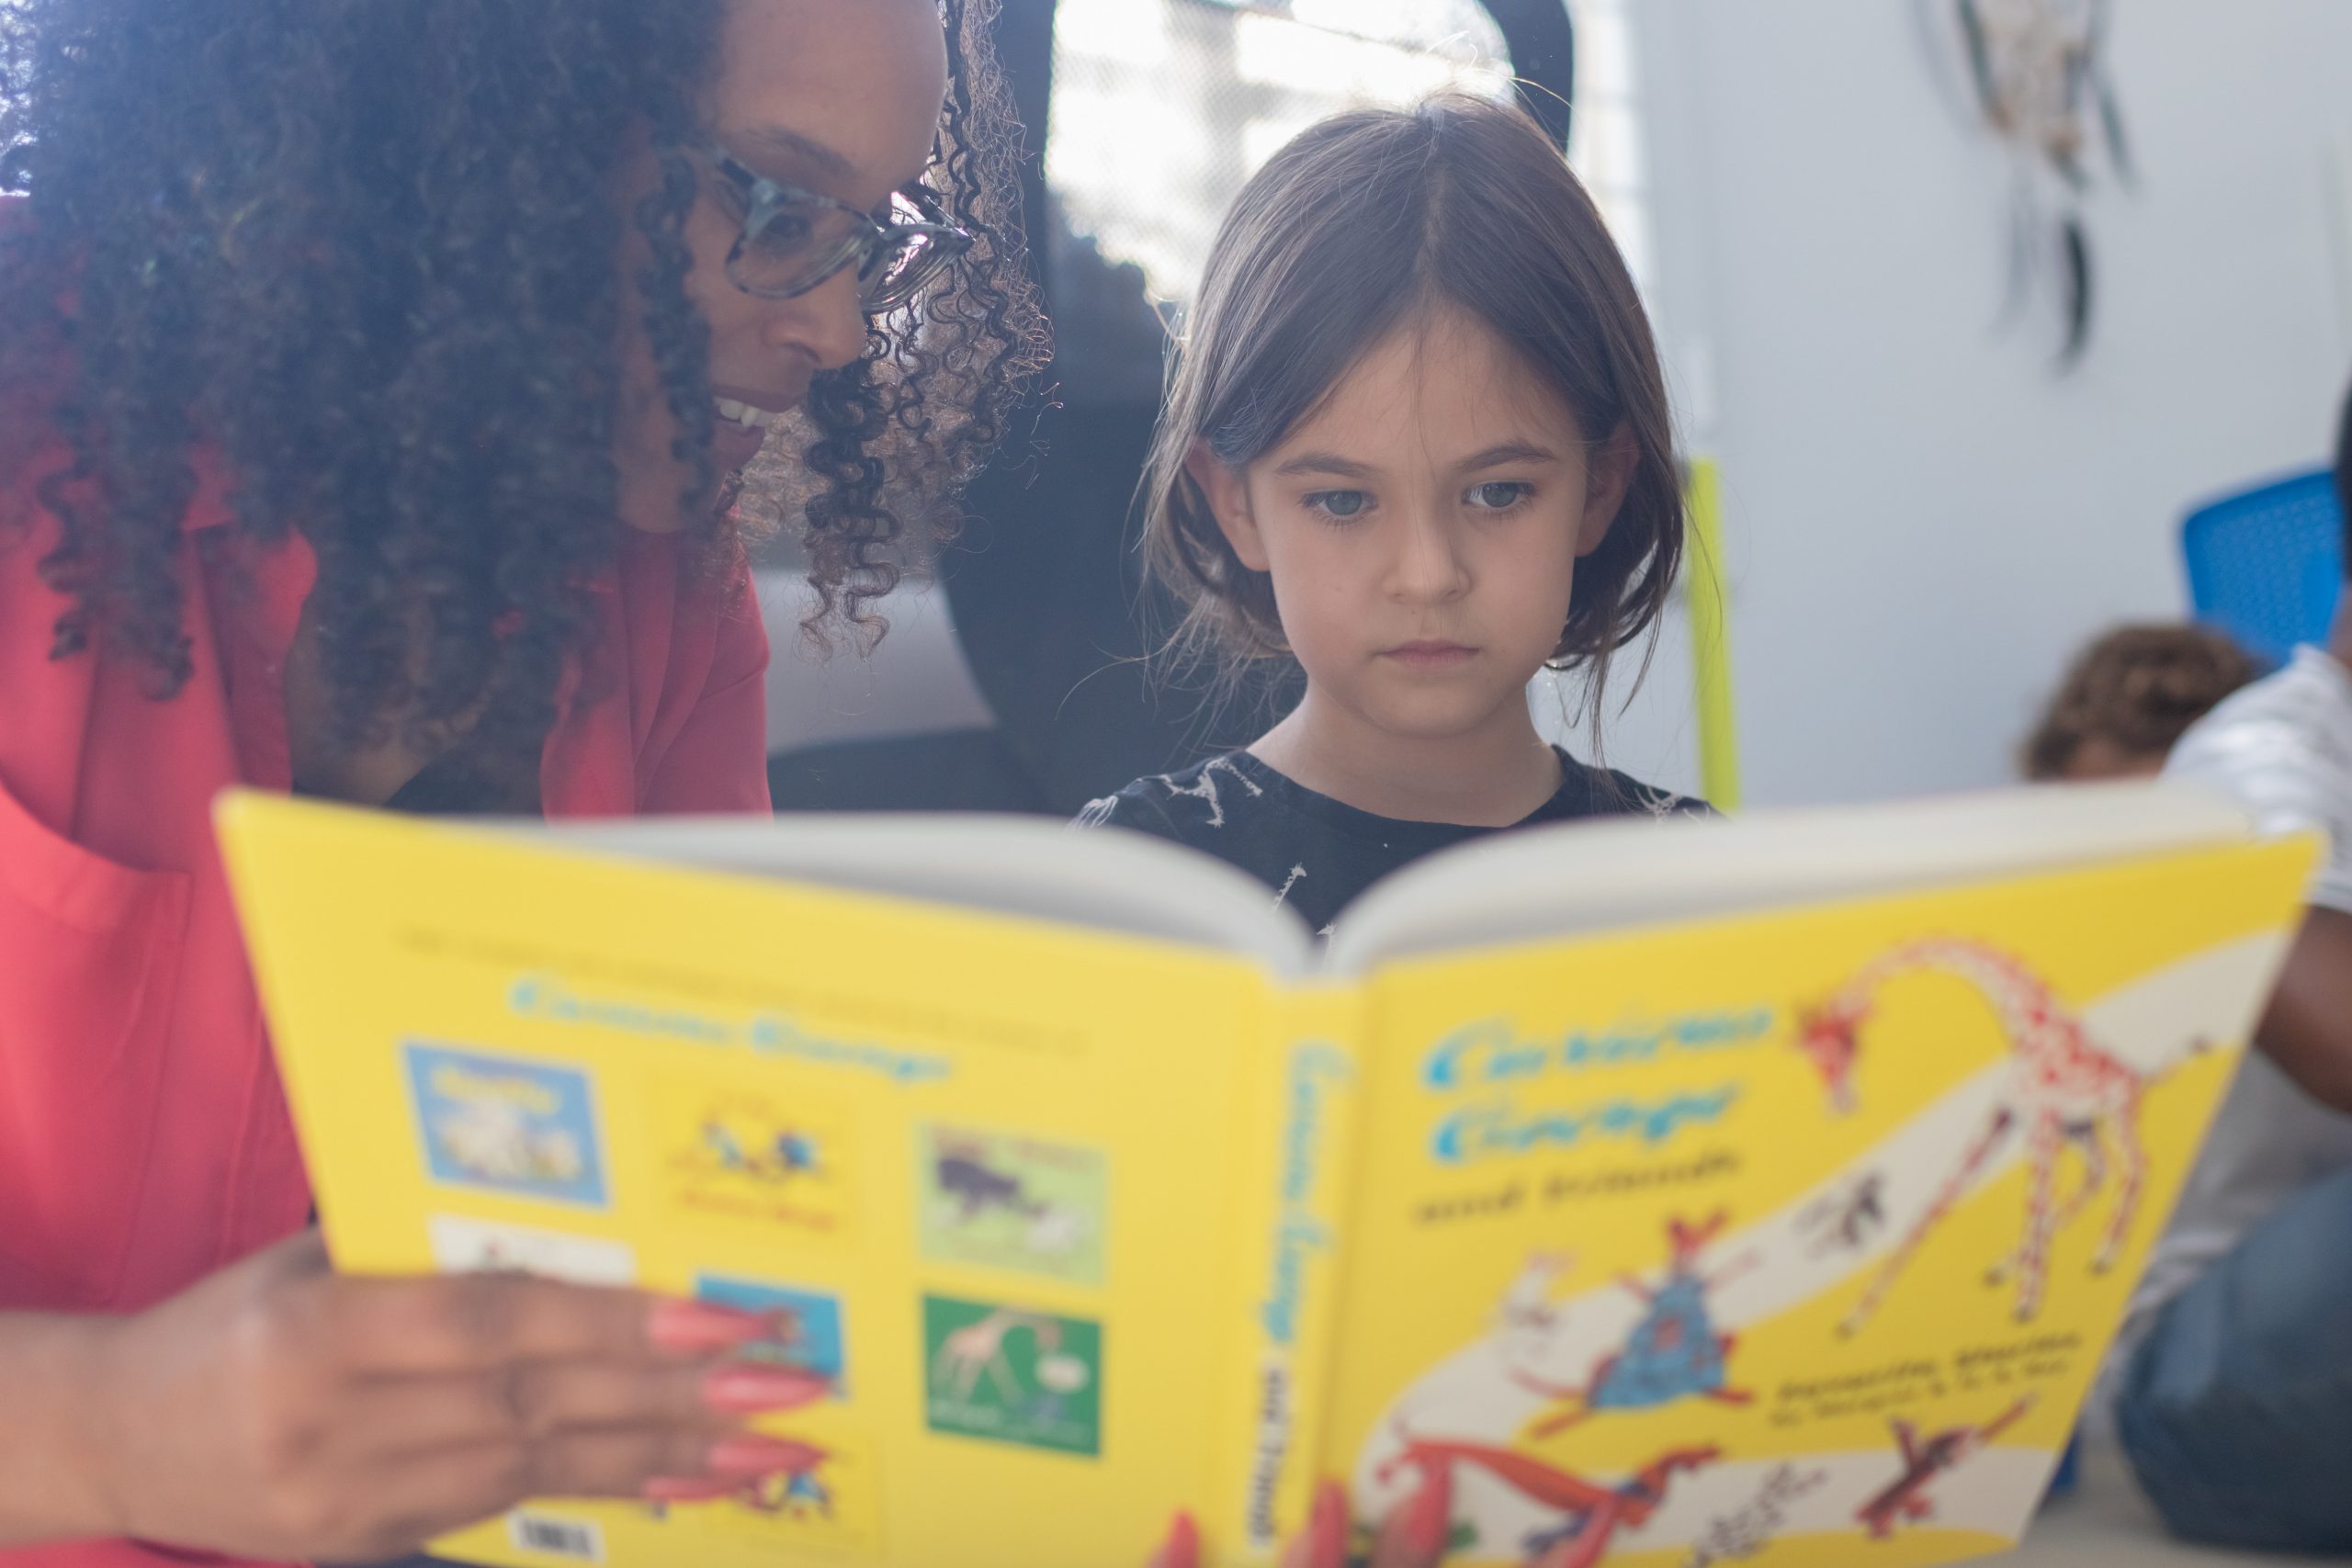 Child Care provider reading to child 
